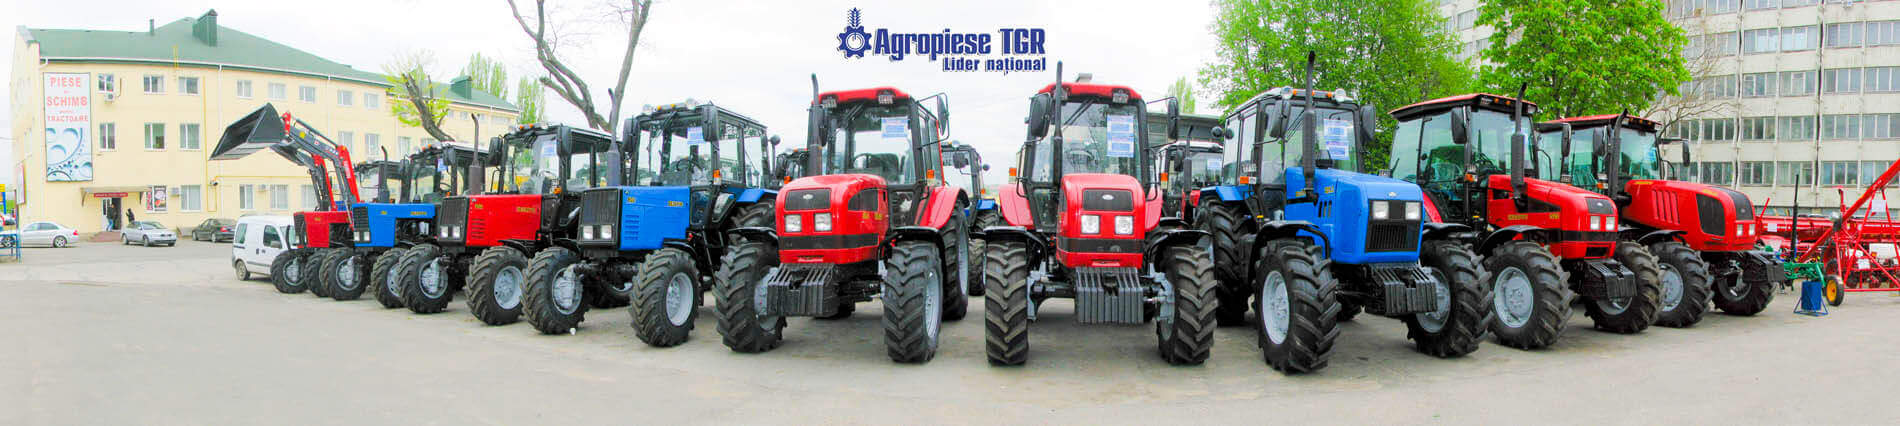 Compania Agropiese TGR GRUP